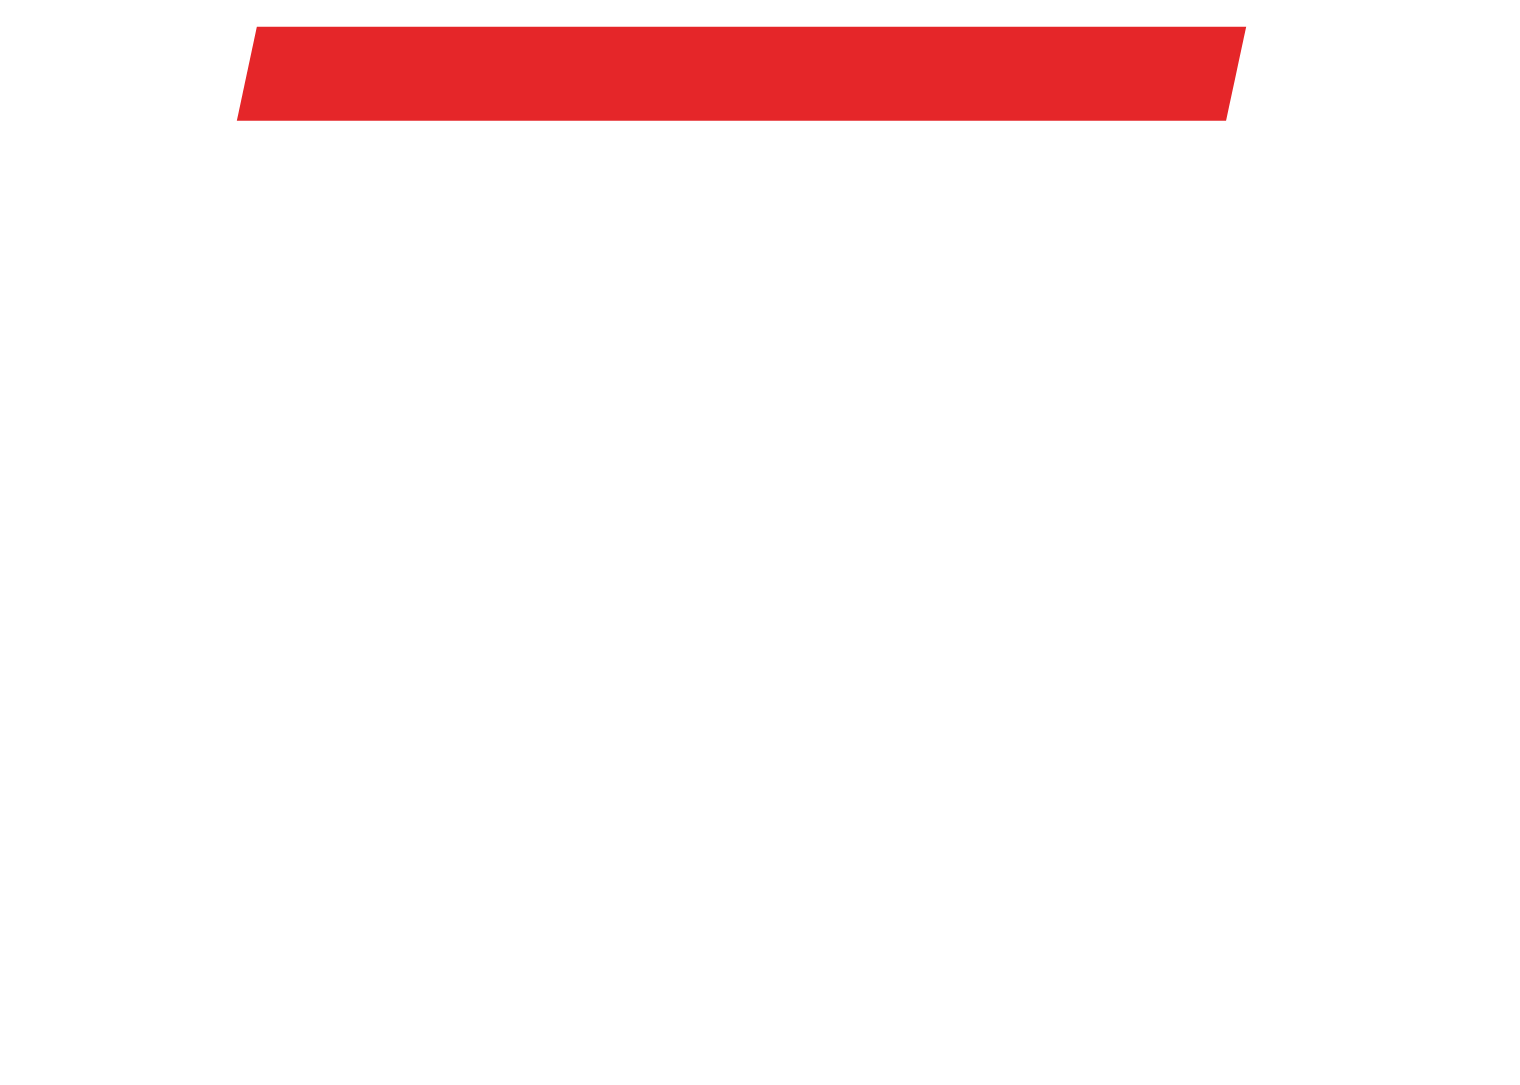 Hong Kong Ferry logo pour fonds sombres (PNG transparent)